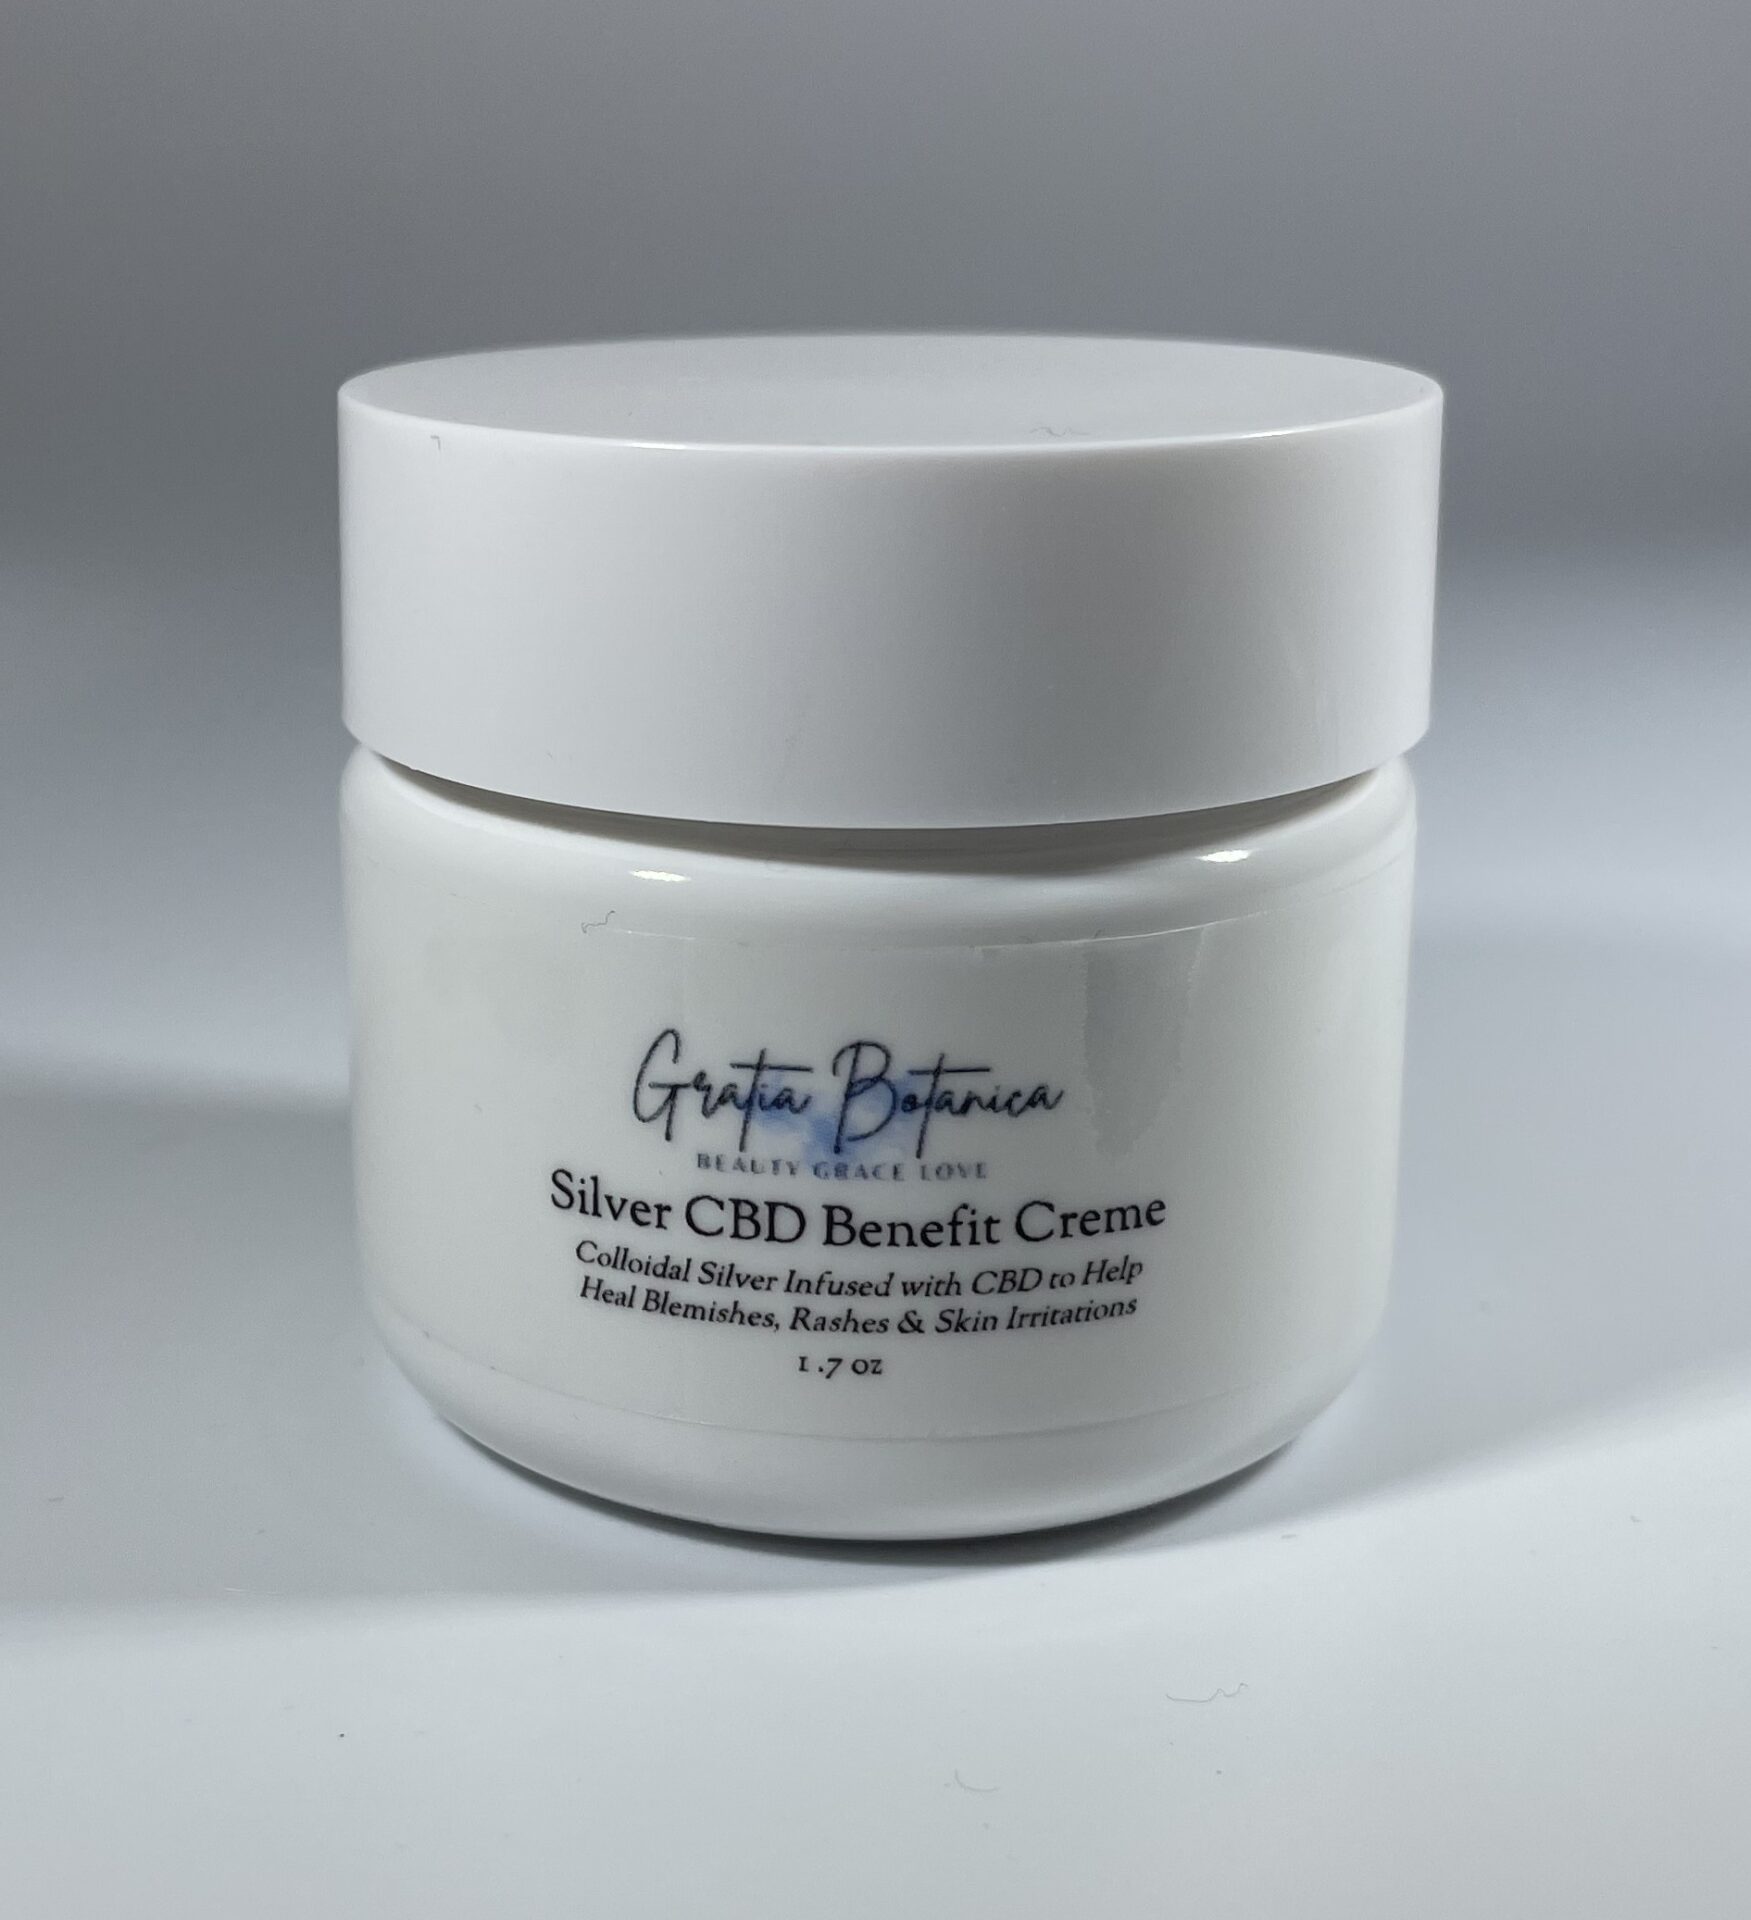 Silver CBD benefit crème